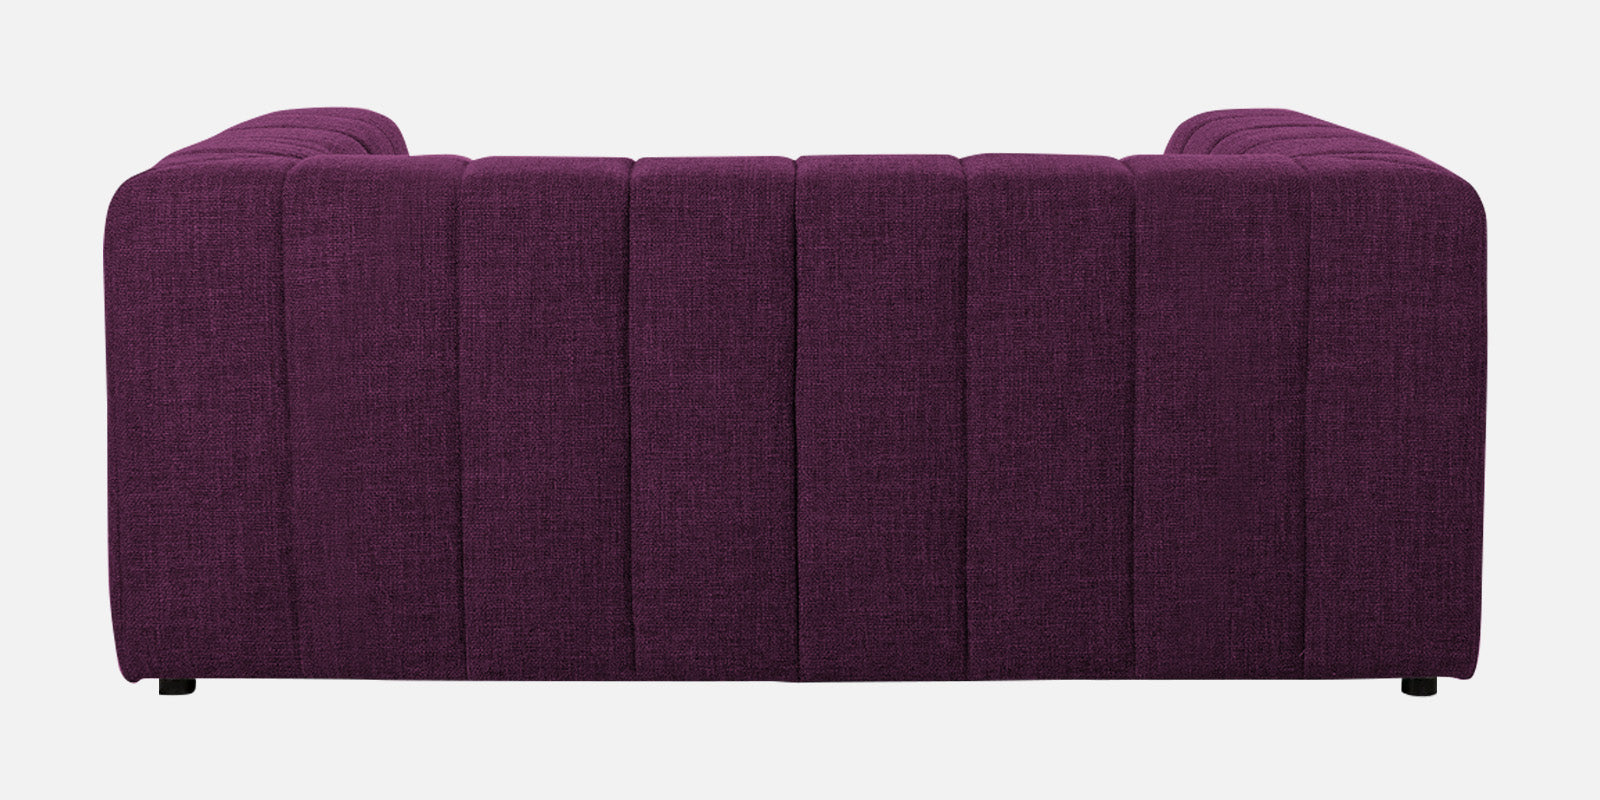 Lara Fabric 2 Seater Sofa in Greek Purple Colour